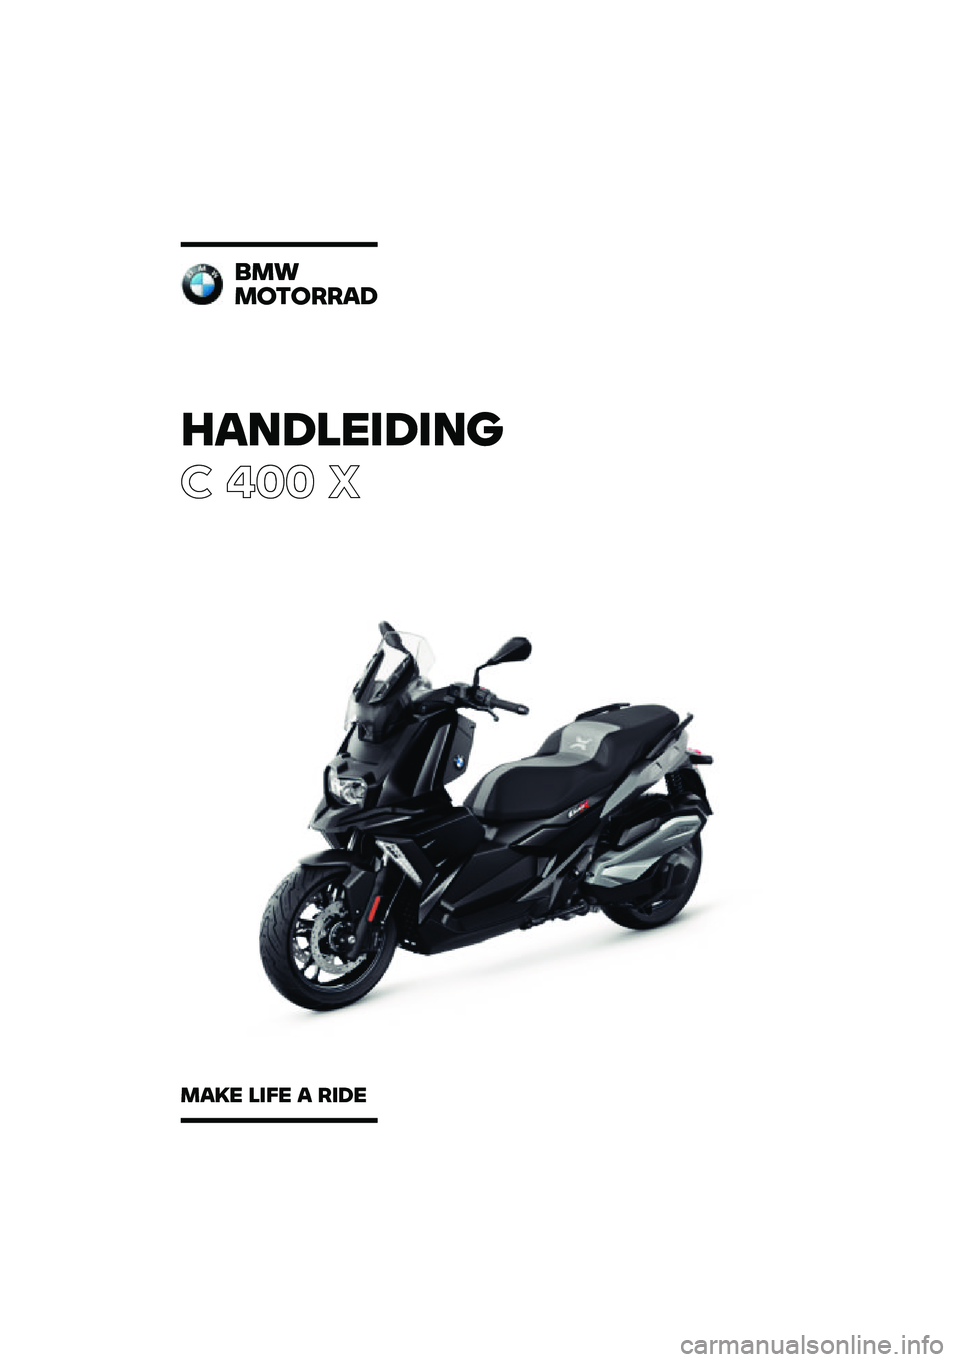 BMW MOTORRAD C 400 X 2020  Handleiding (in Dutch) �������\b��\b��	
� ��� �
�
��\f
��
��
����
���� ��\b�� � ��\b�� 